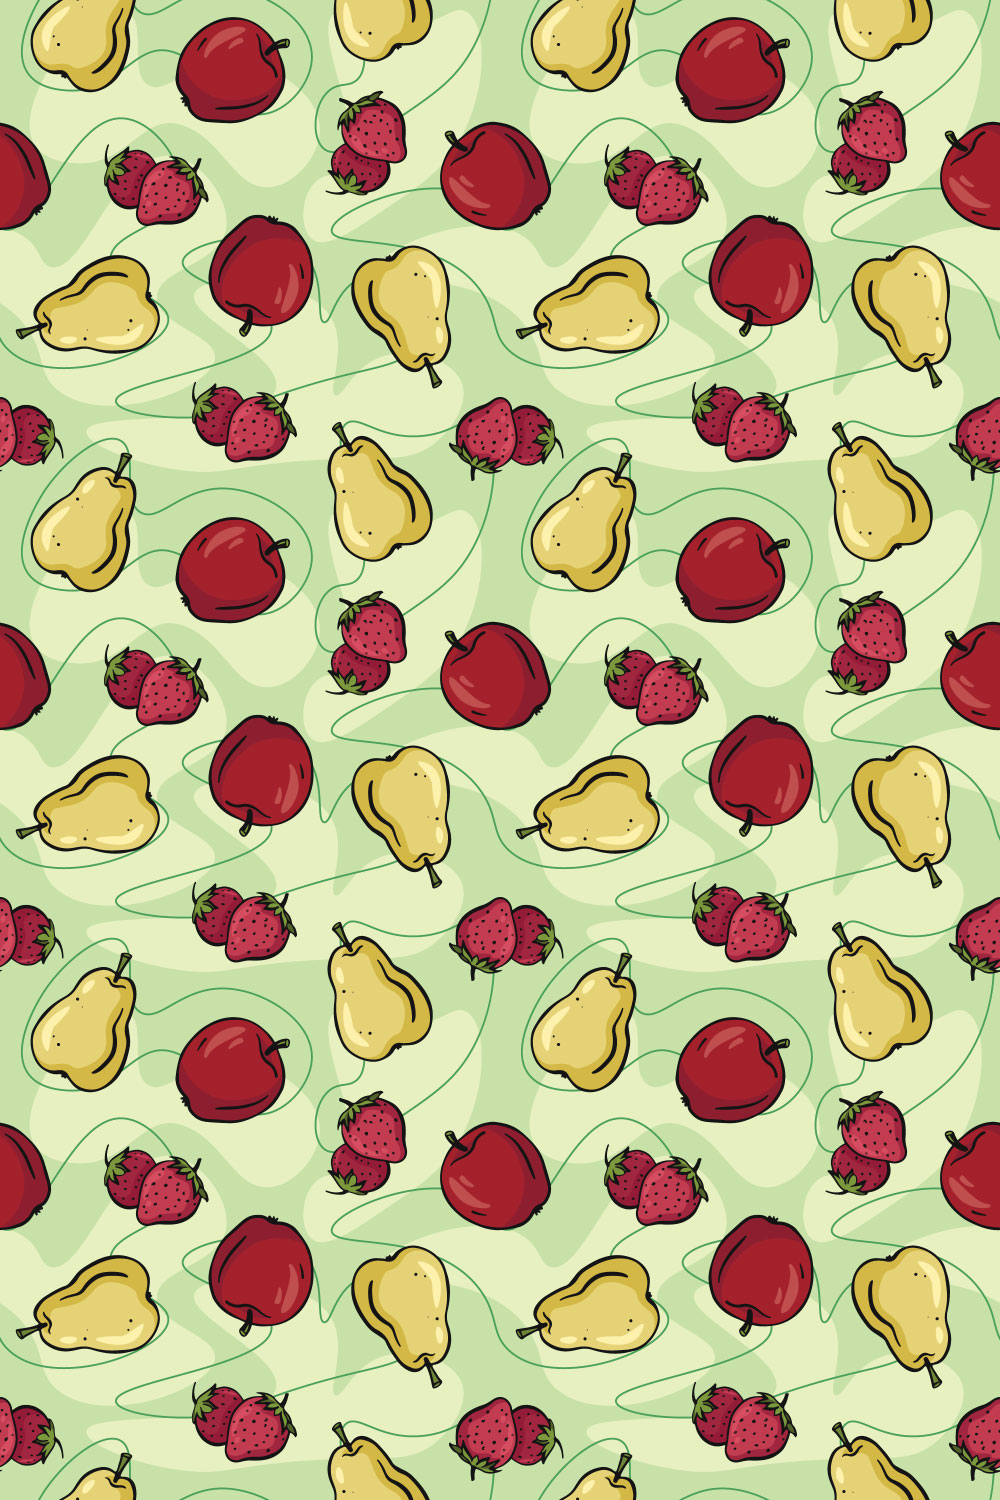 Fruit set: Patterns & Elements pinterest preview image.